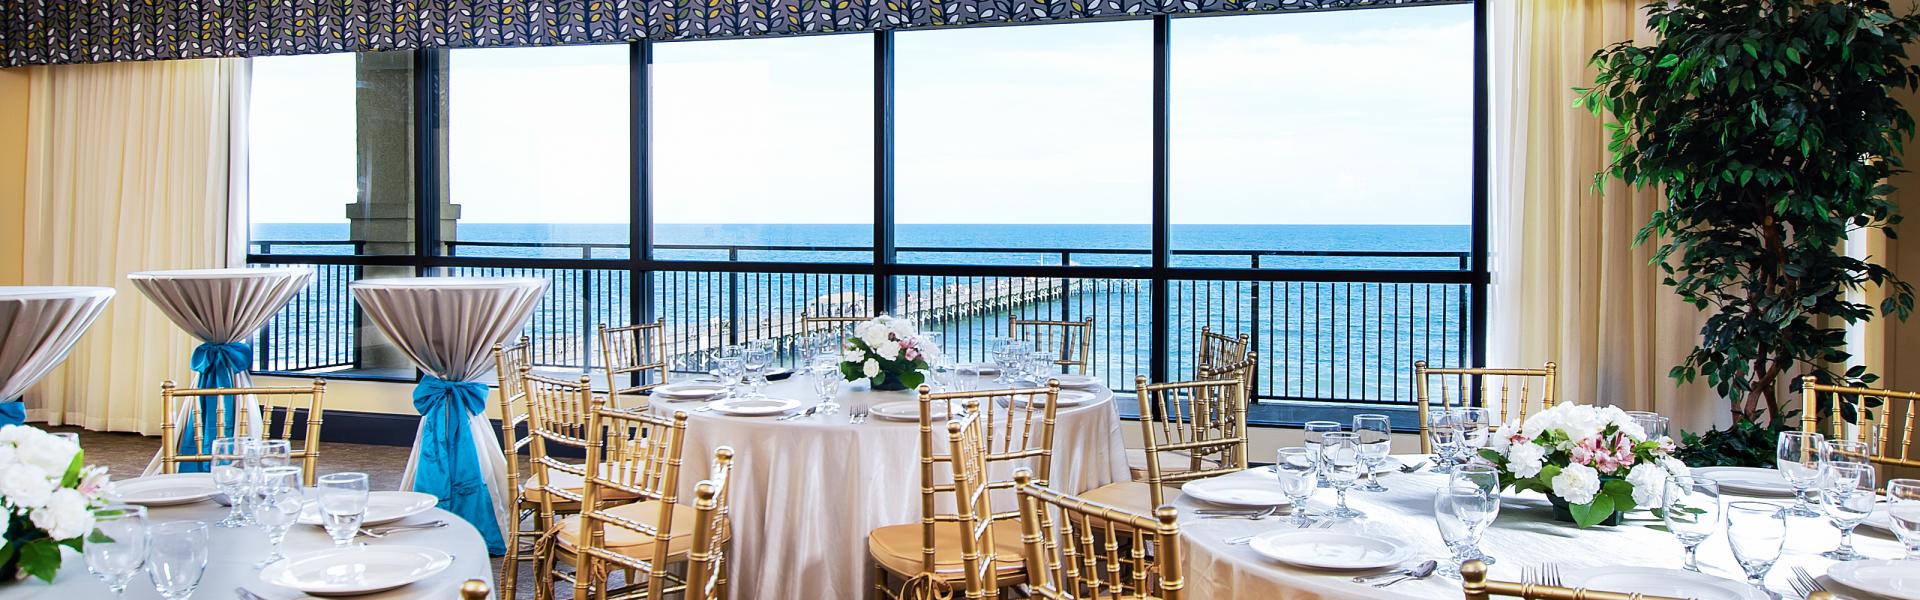 Myrtle Beach Media Keep It Grand With An Attainable Destination Wedding